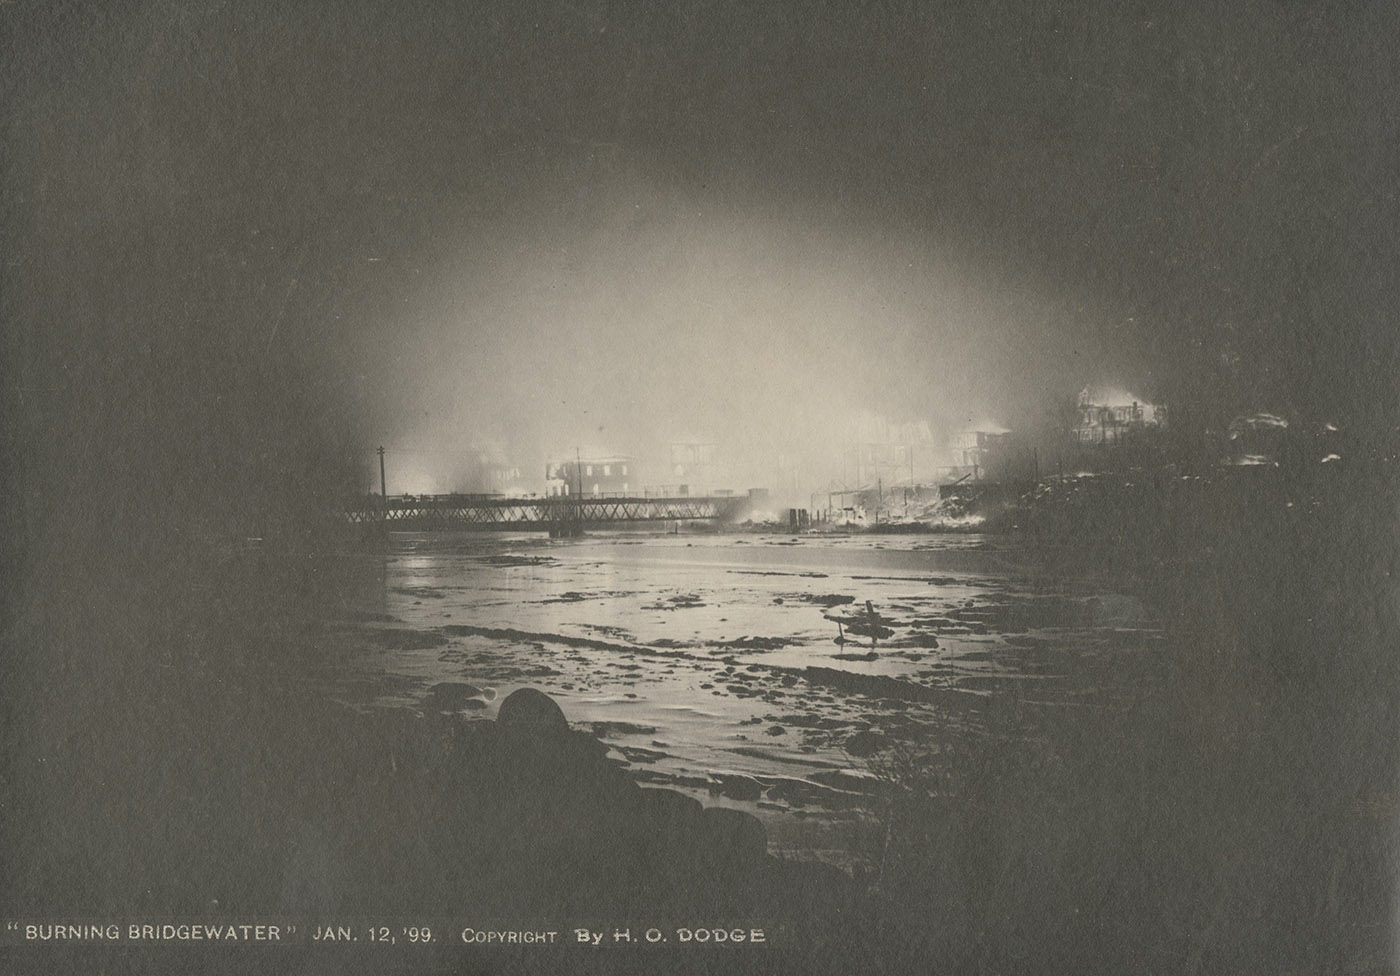 communityalbums - Burning Bridgewater Fire of 1899